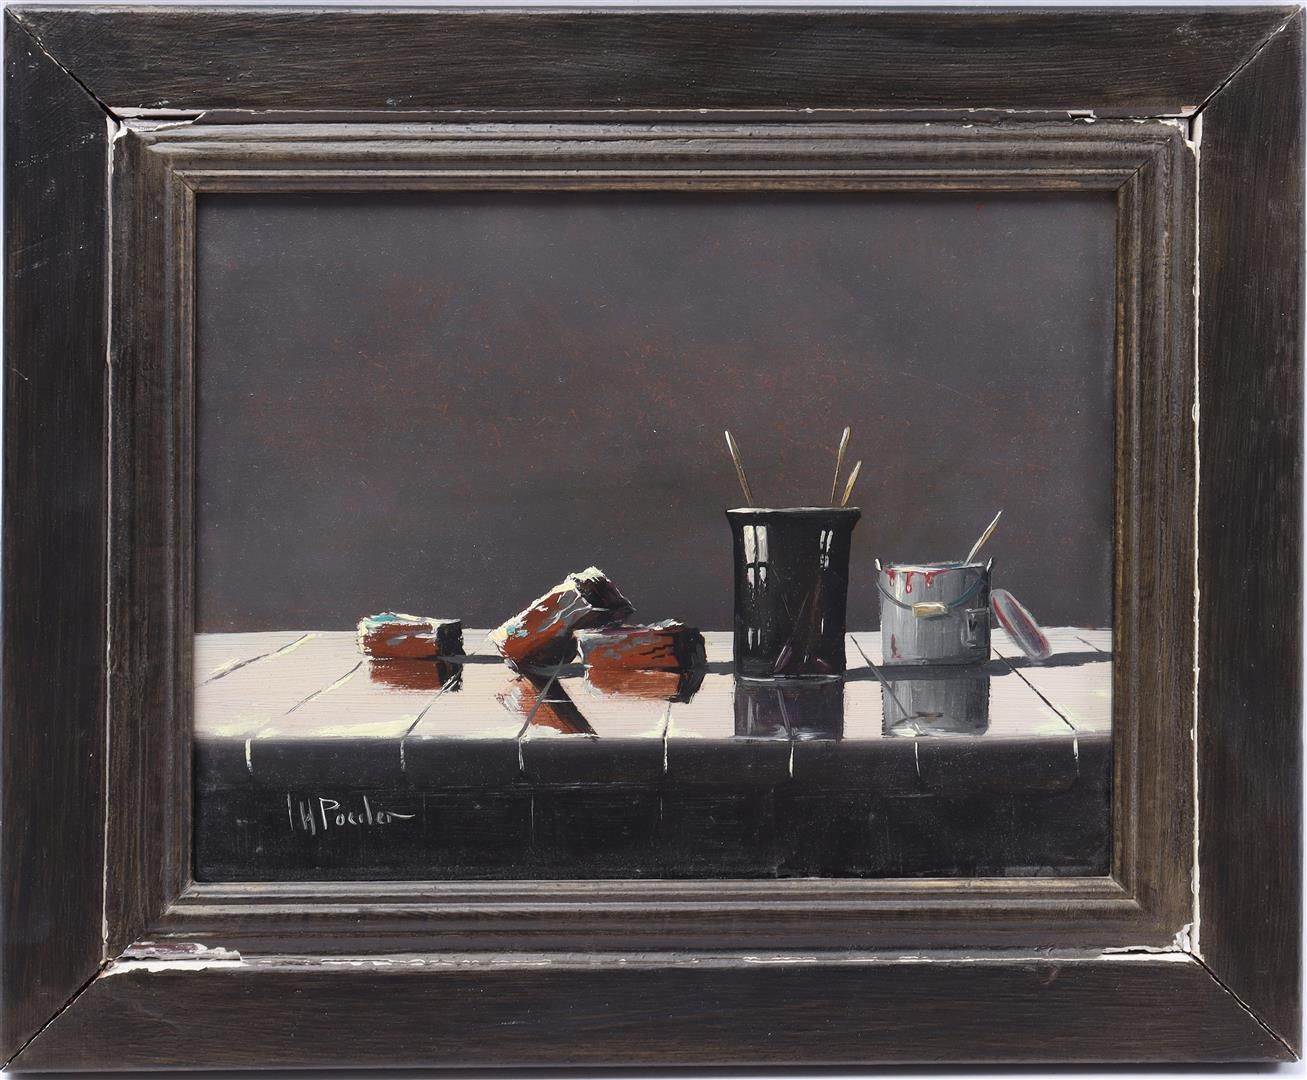 Henk Poeder 亨克-波德 (1964-)

静物与画家的属性，面板18x24厘米